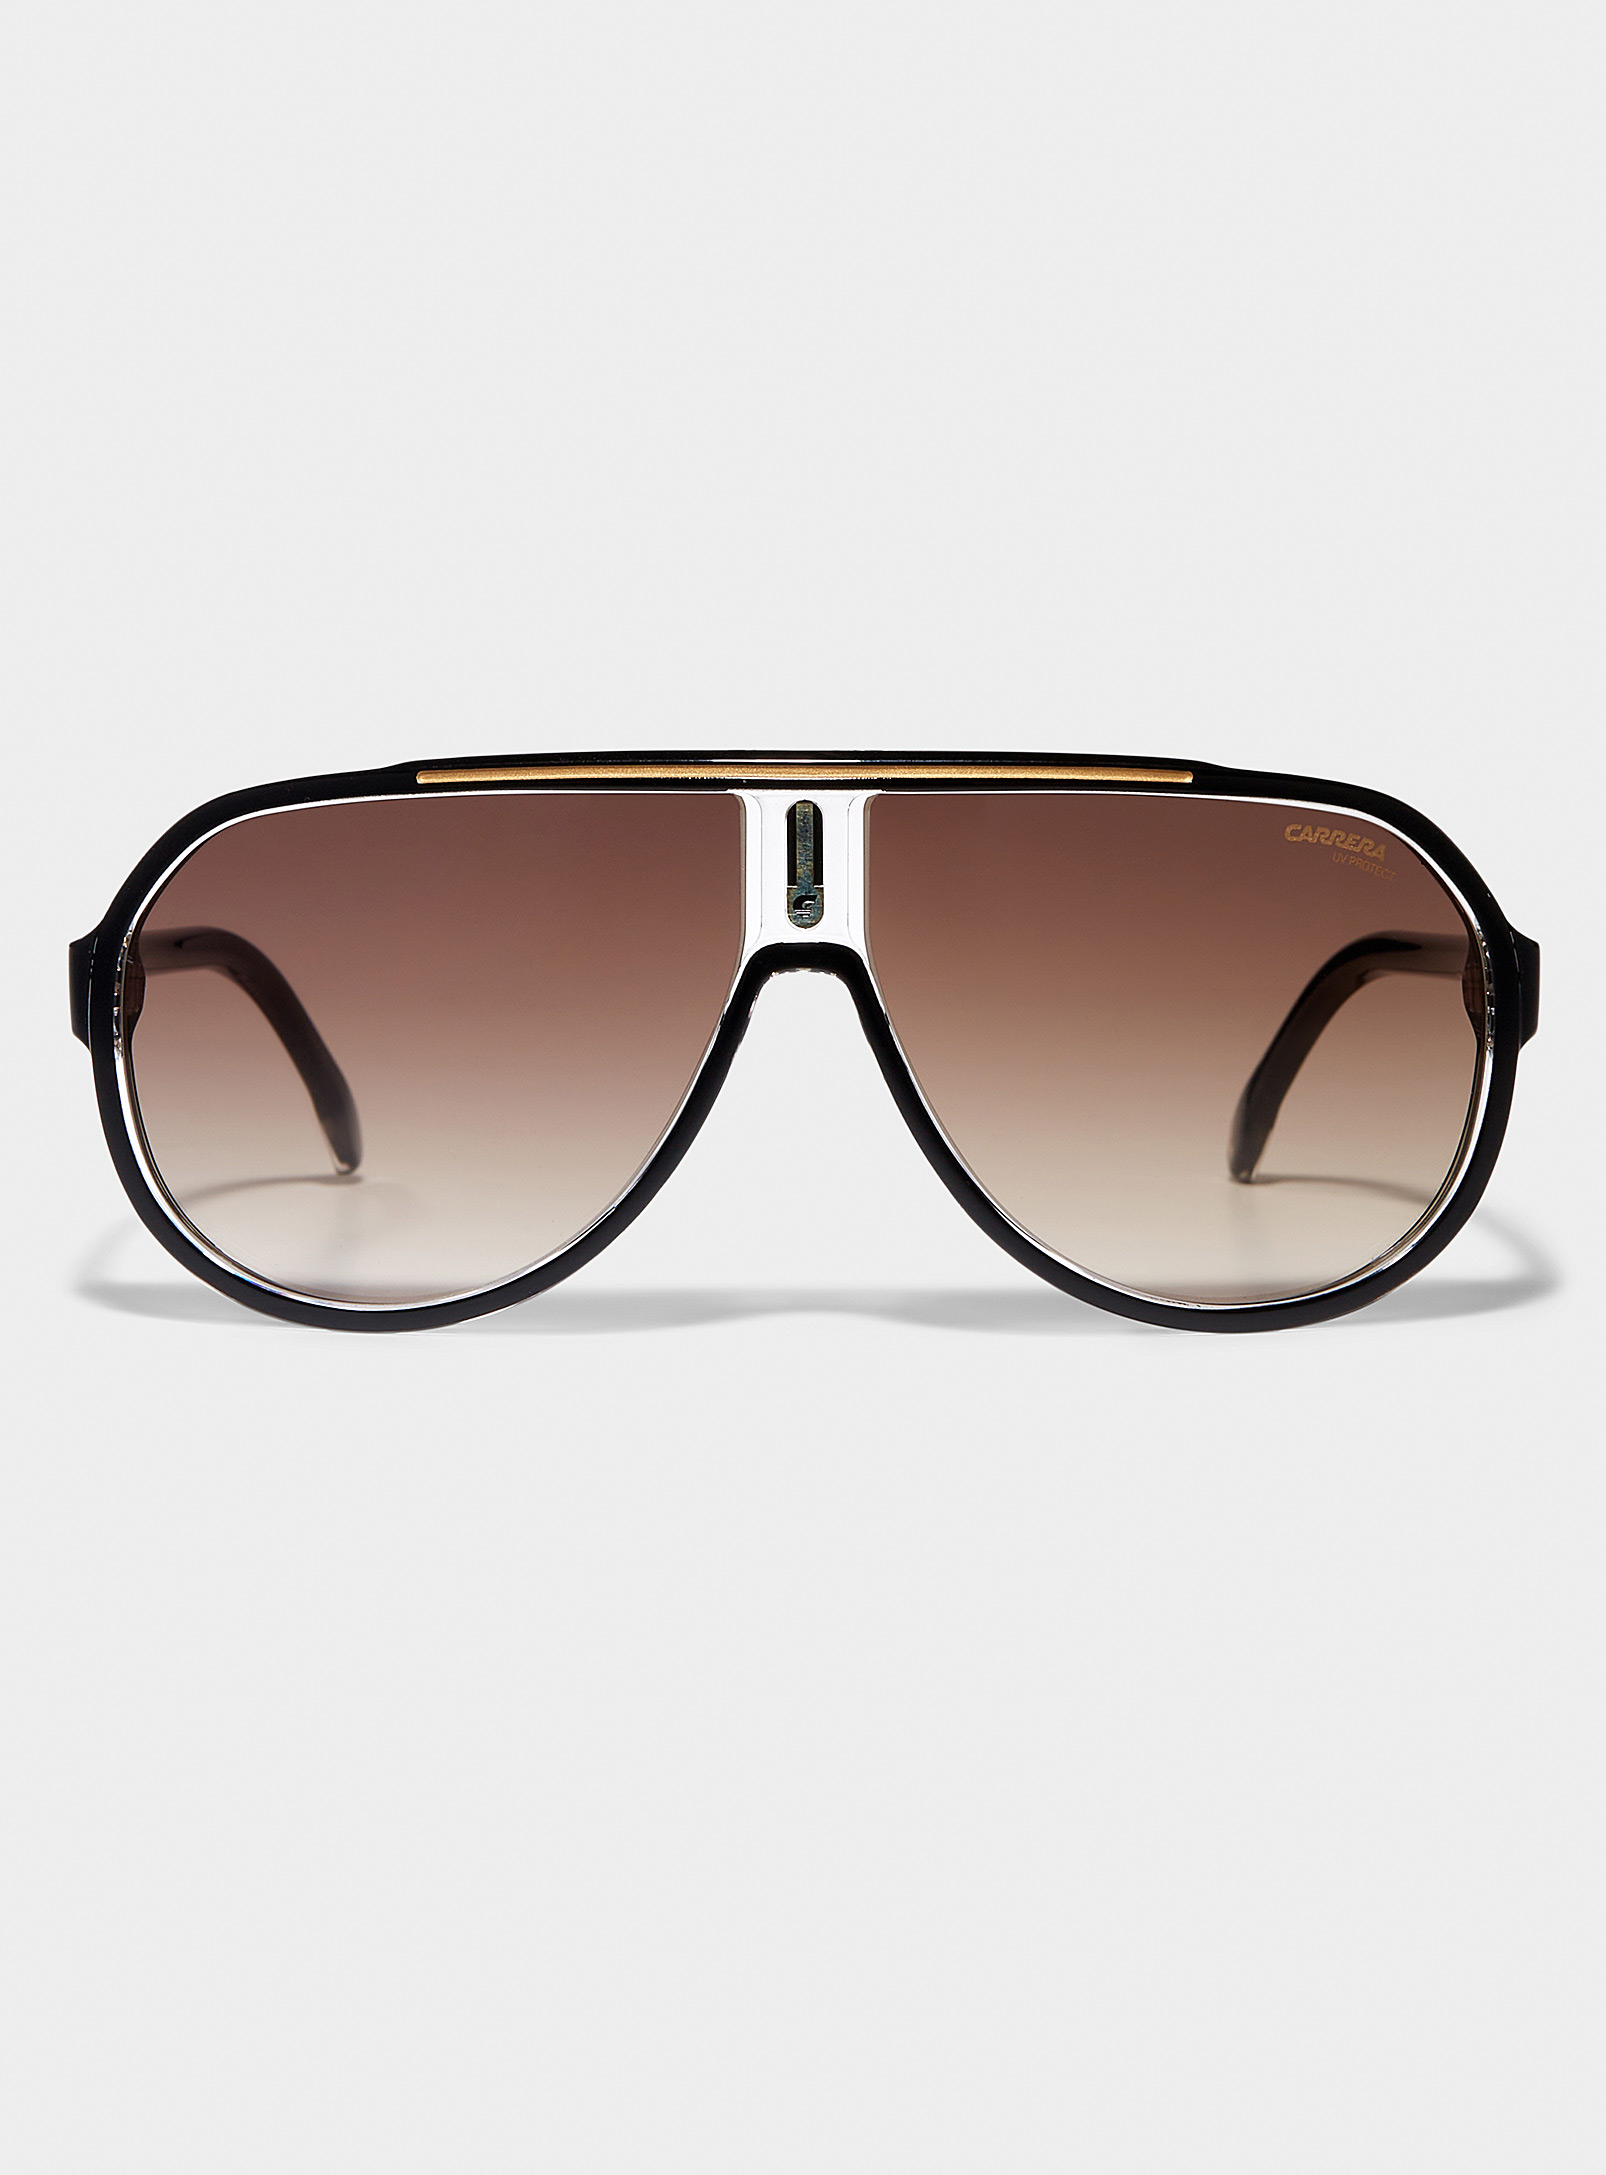 Carrera - Men's Black aviator sunglasses